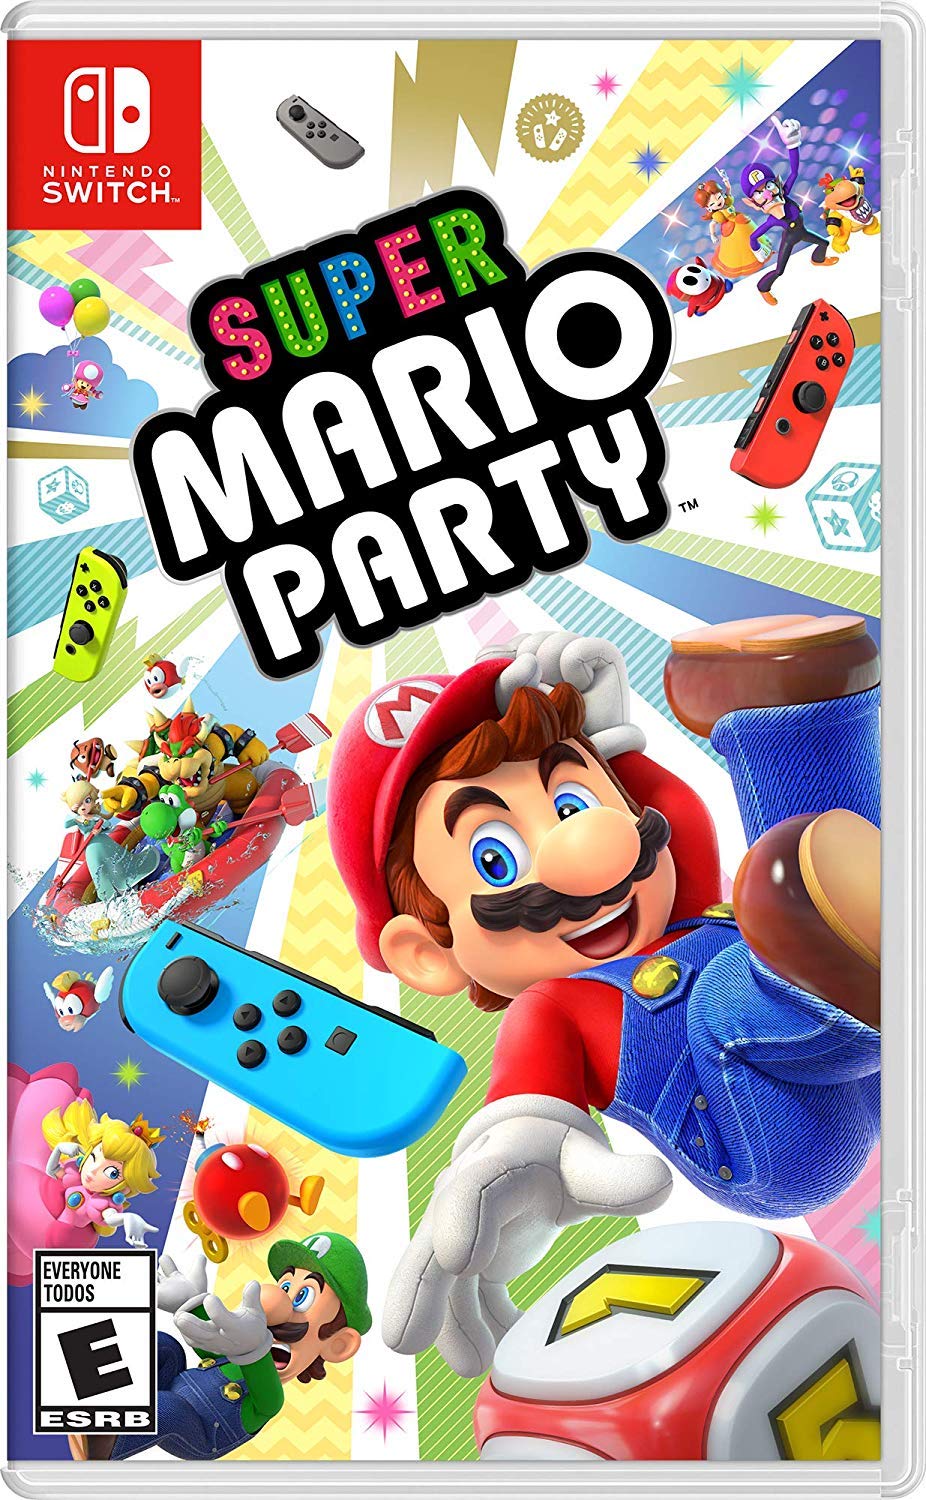 Super Mario Party - Nintendo Switch - $39.99 Free Prime Shipping @ Amazon